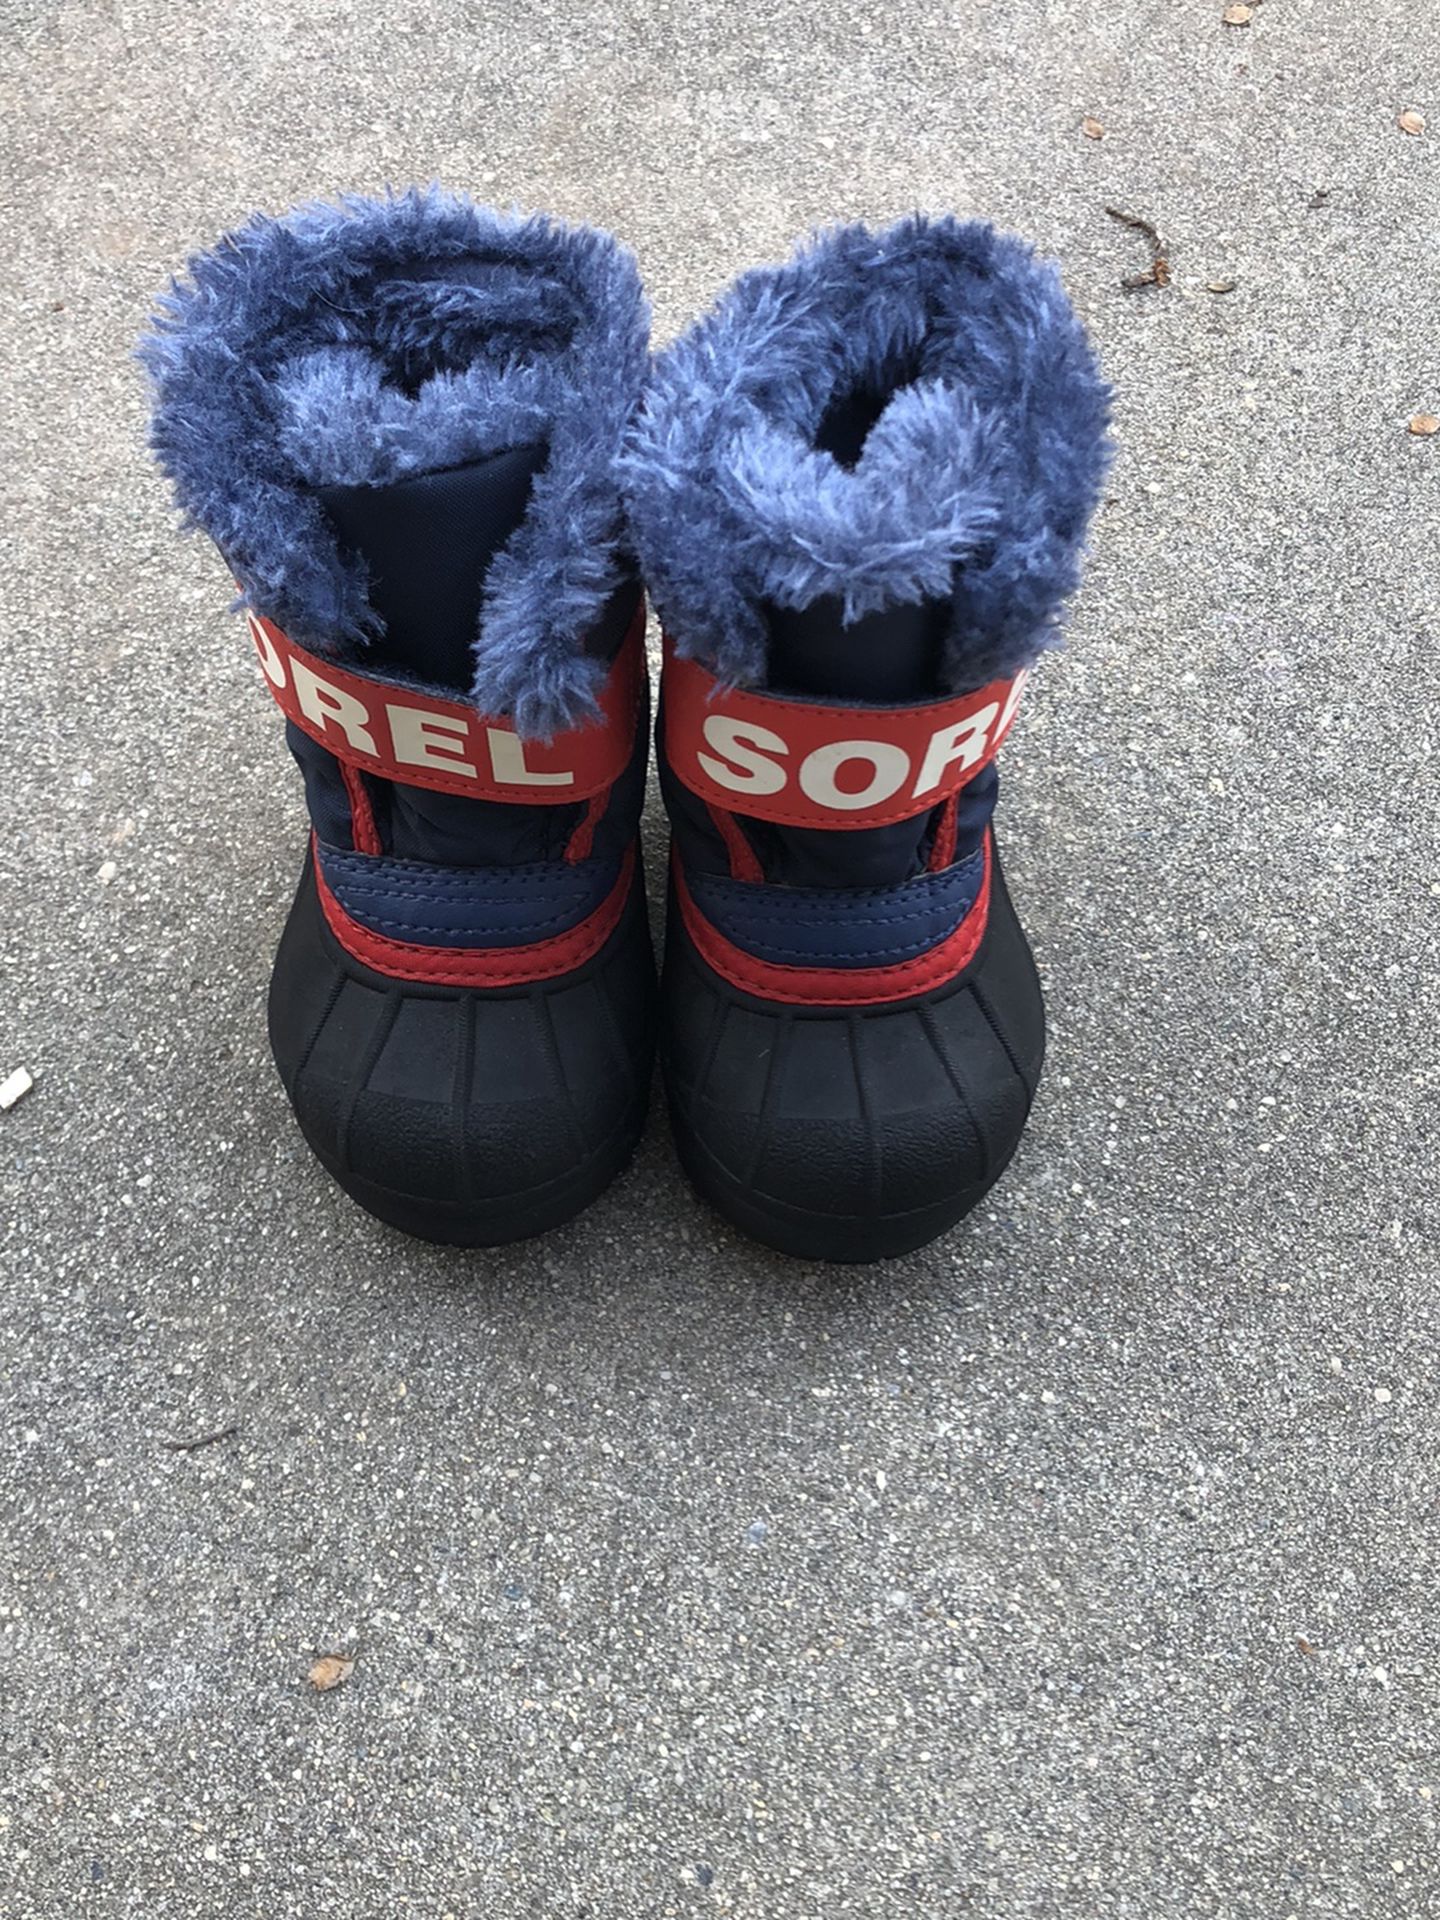 Kids Sorel Snow Boots. Size 4